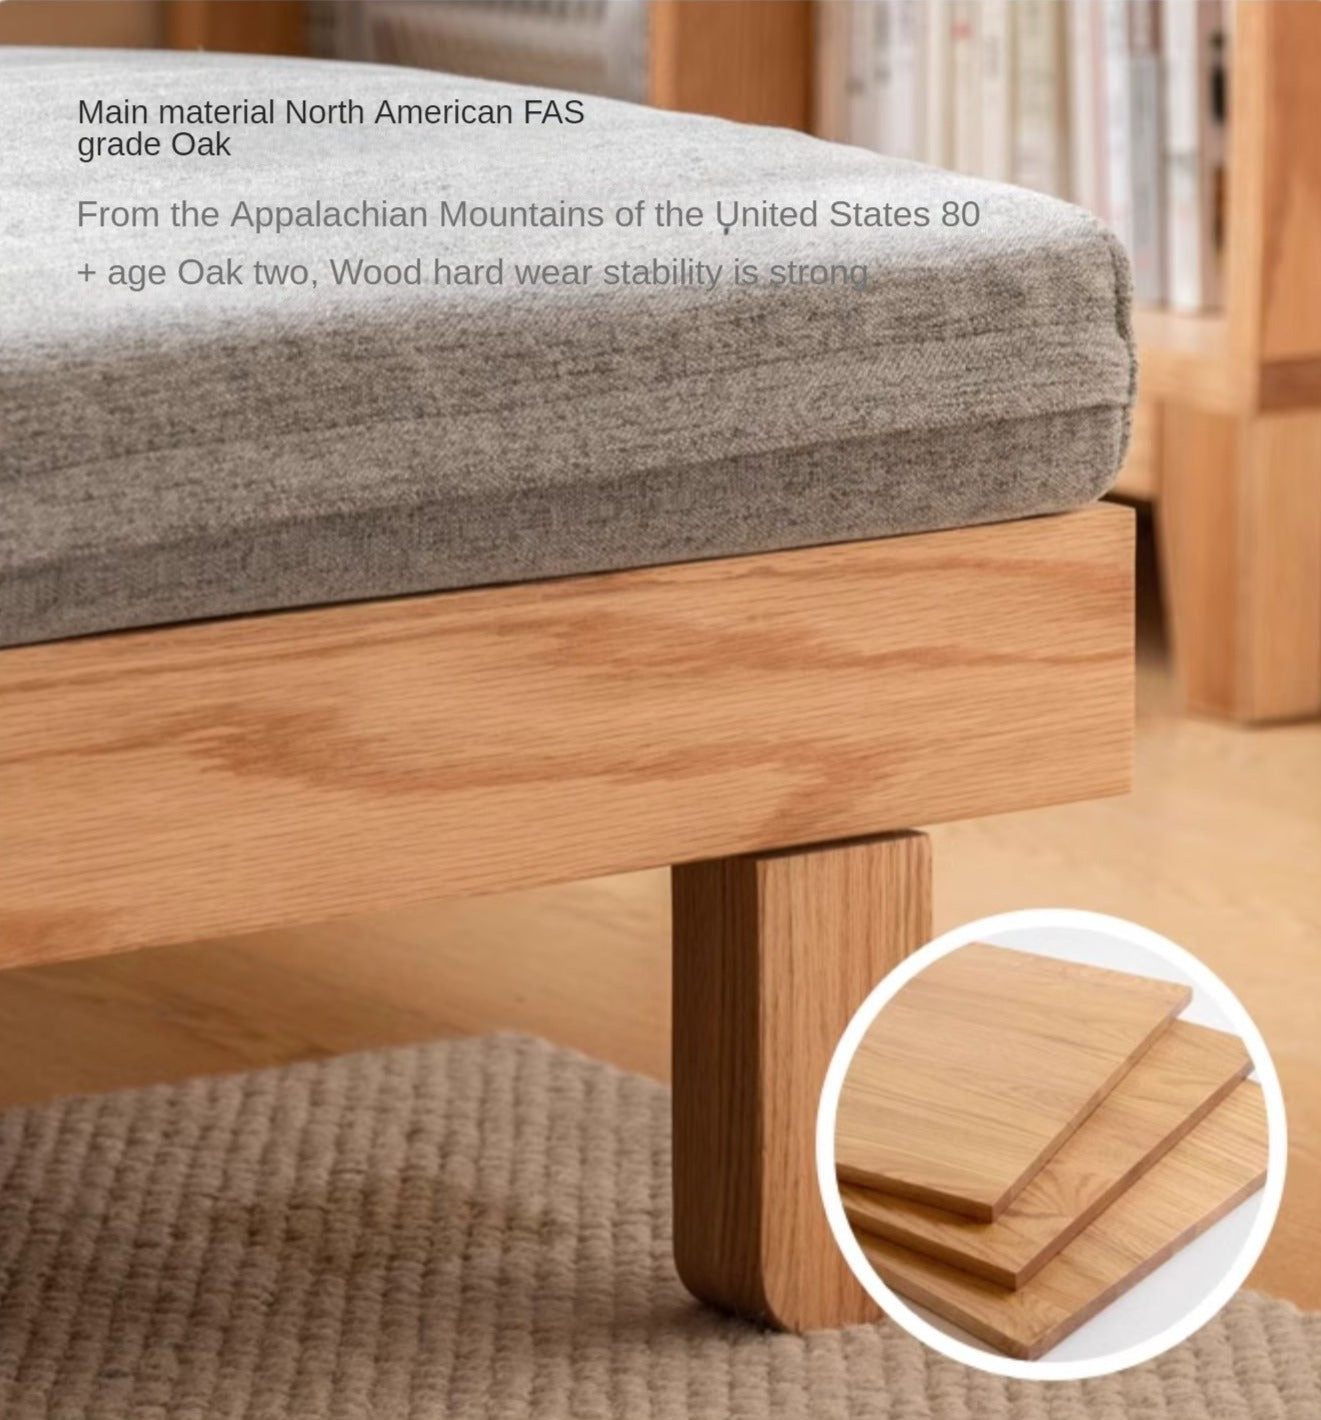 Oak, Beech solid wood sofa bed